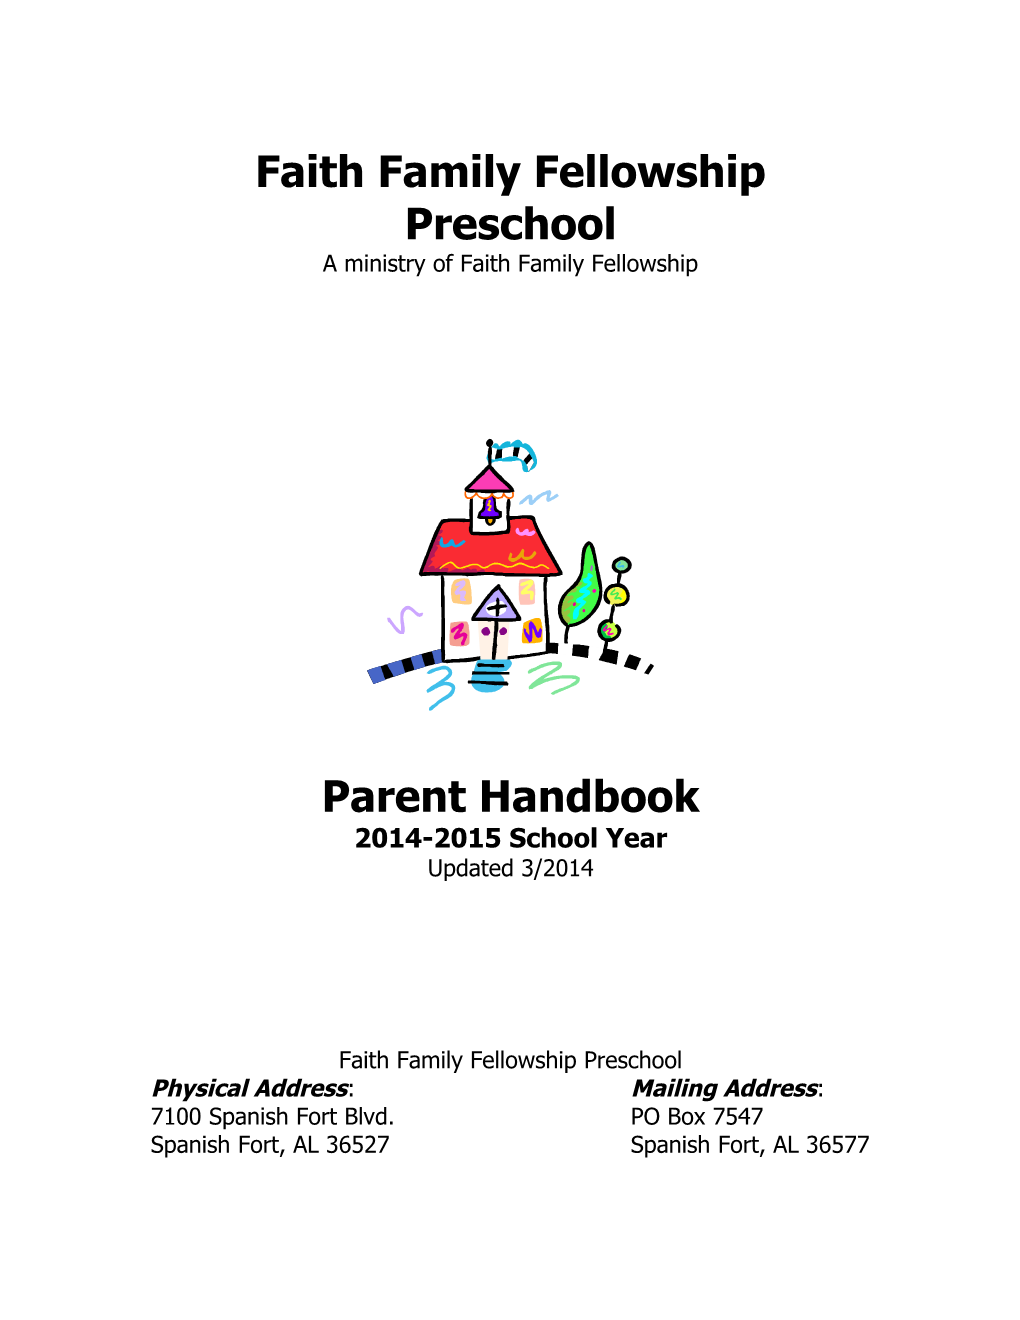 Faith Family Fellowship Preschool